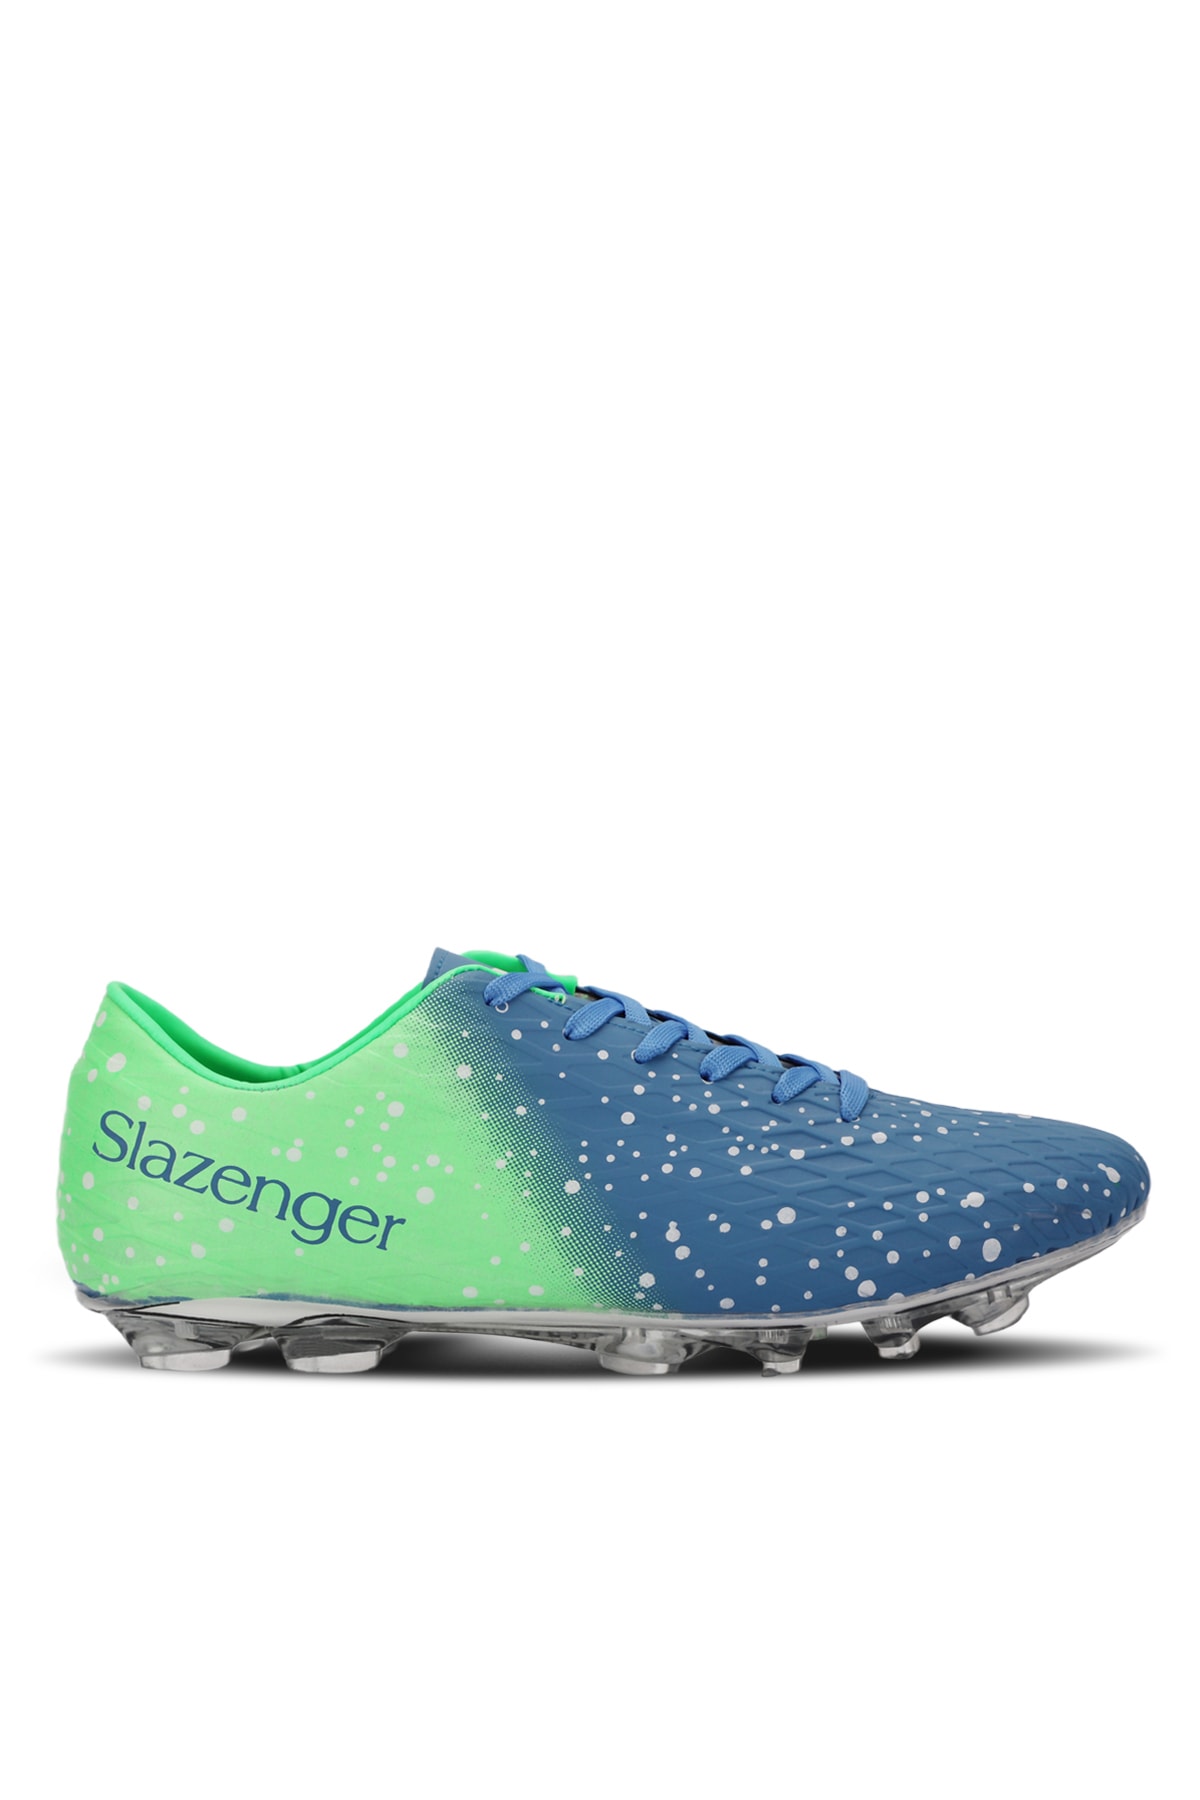 Levně Slazenger Hania Krp Football Men's Astroturf Field Shoes Saks Blue